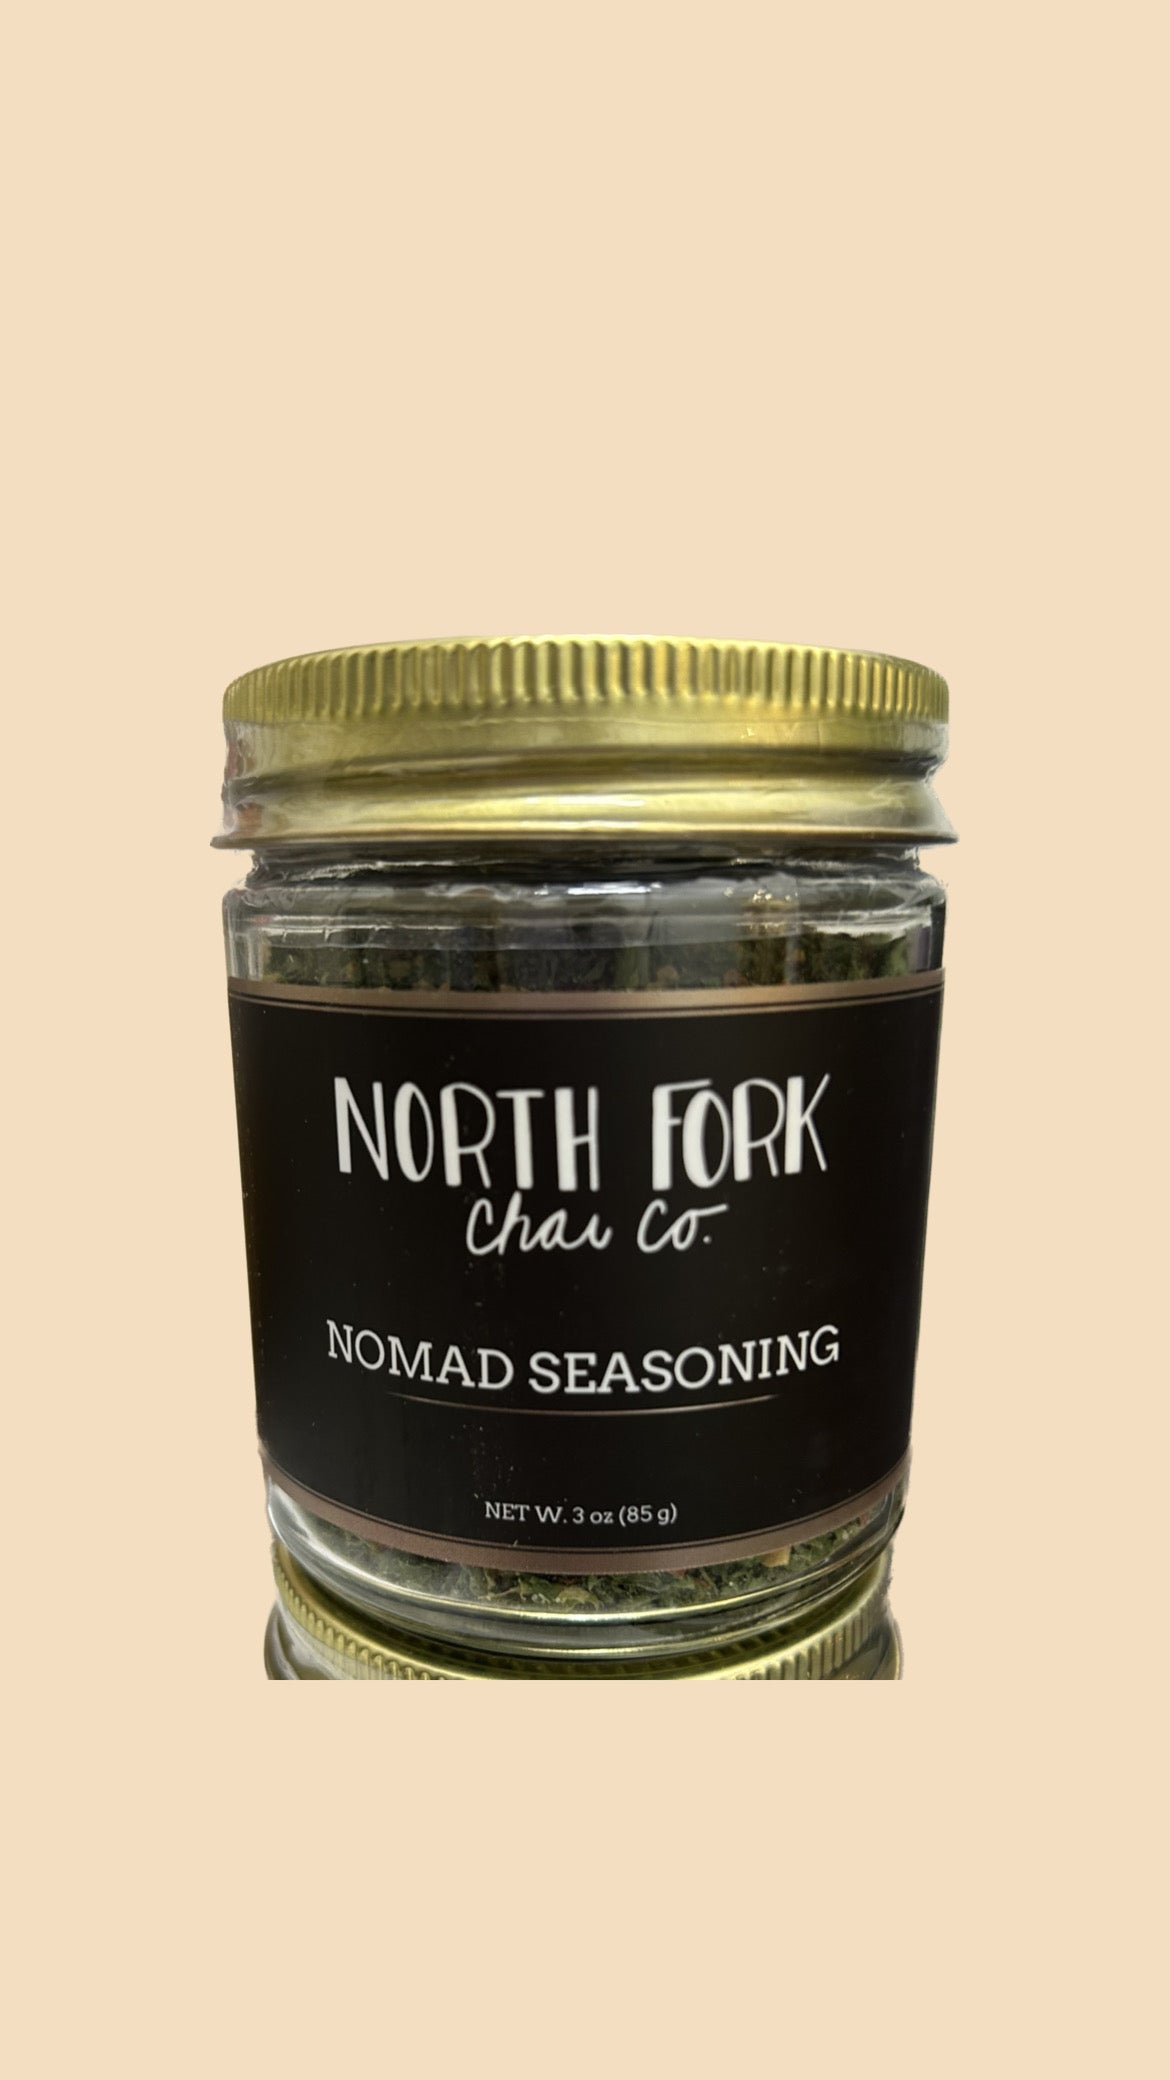 North fork Nomad Seasoning